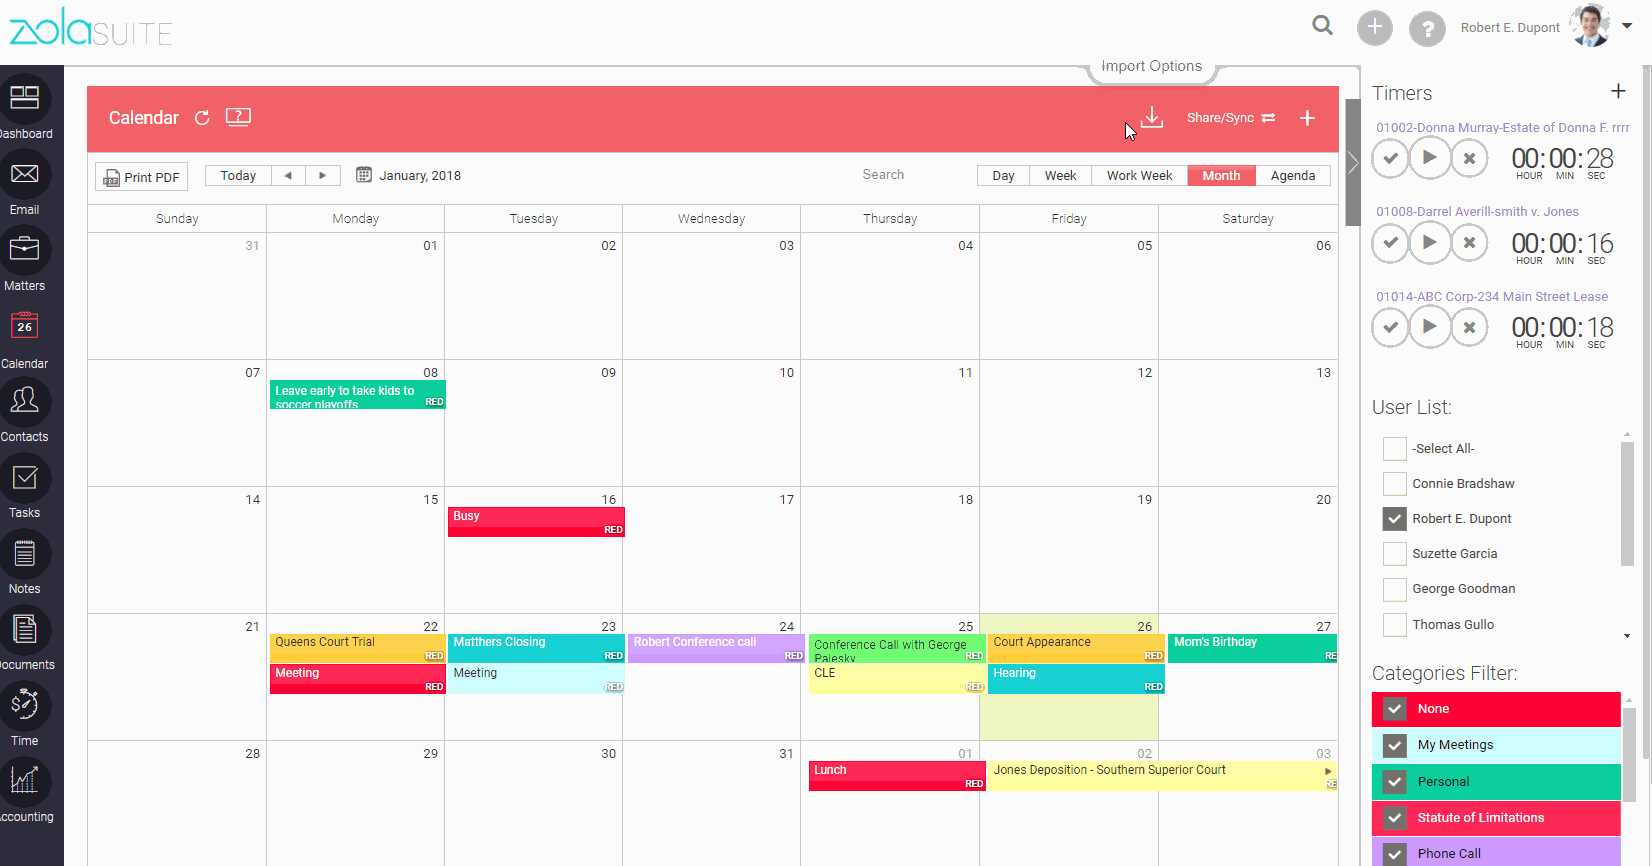 Can I undo a Calendar import?